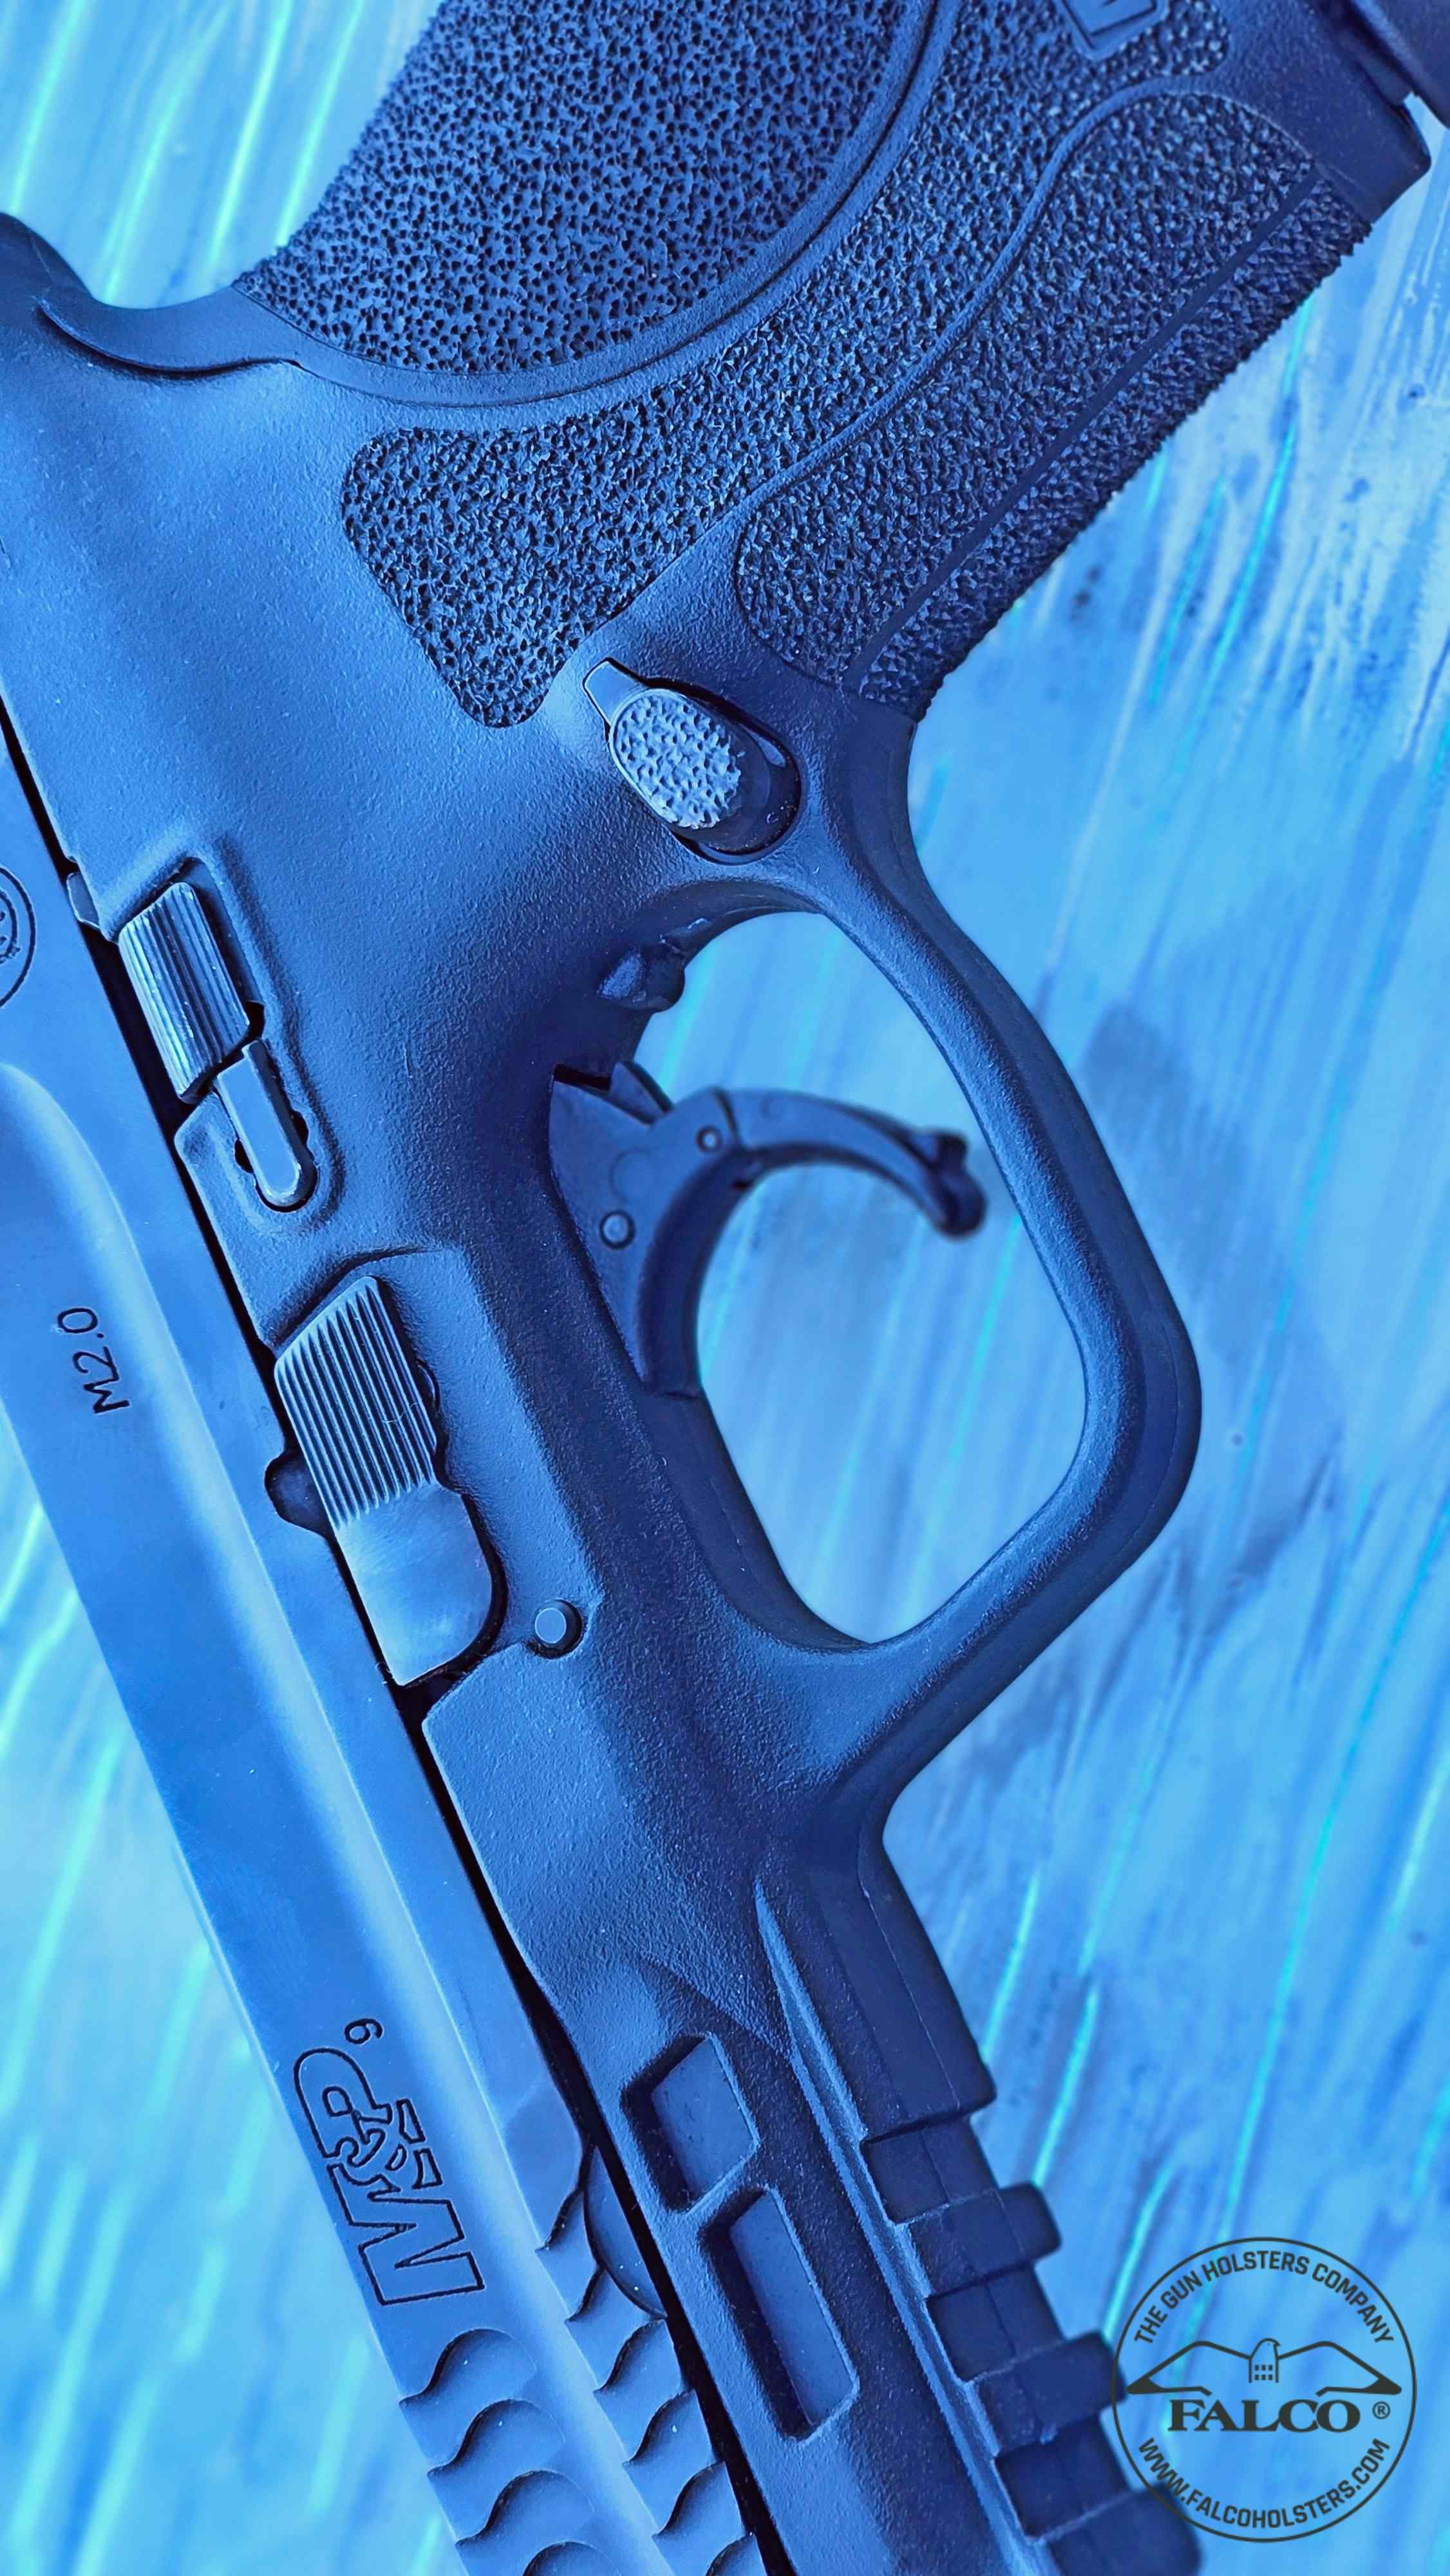 S&W M&P 2.0 Compact Trigger